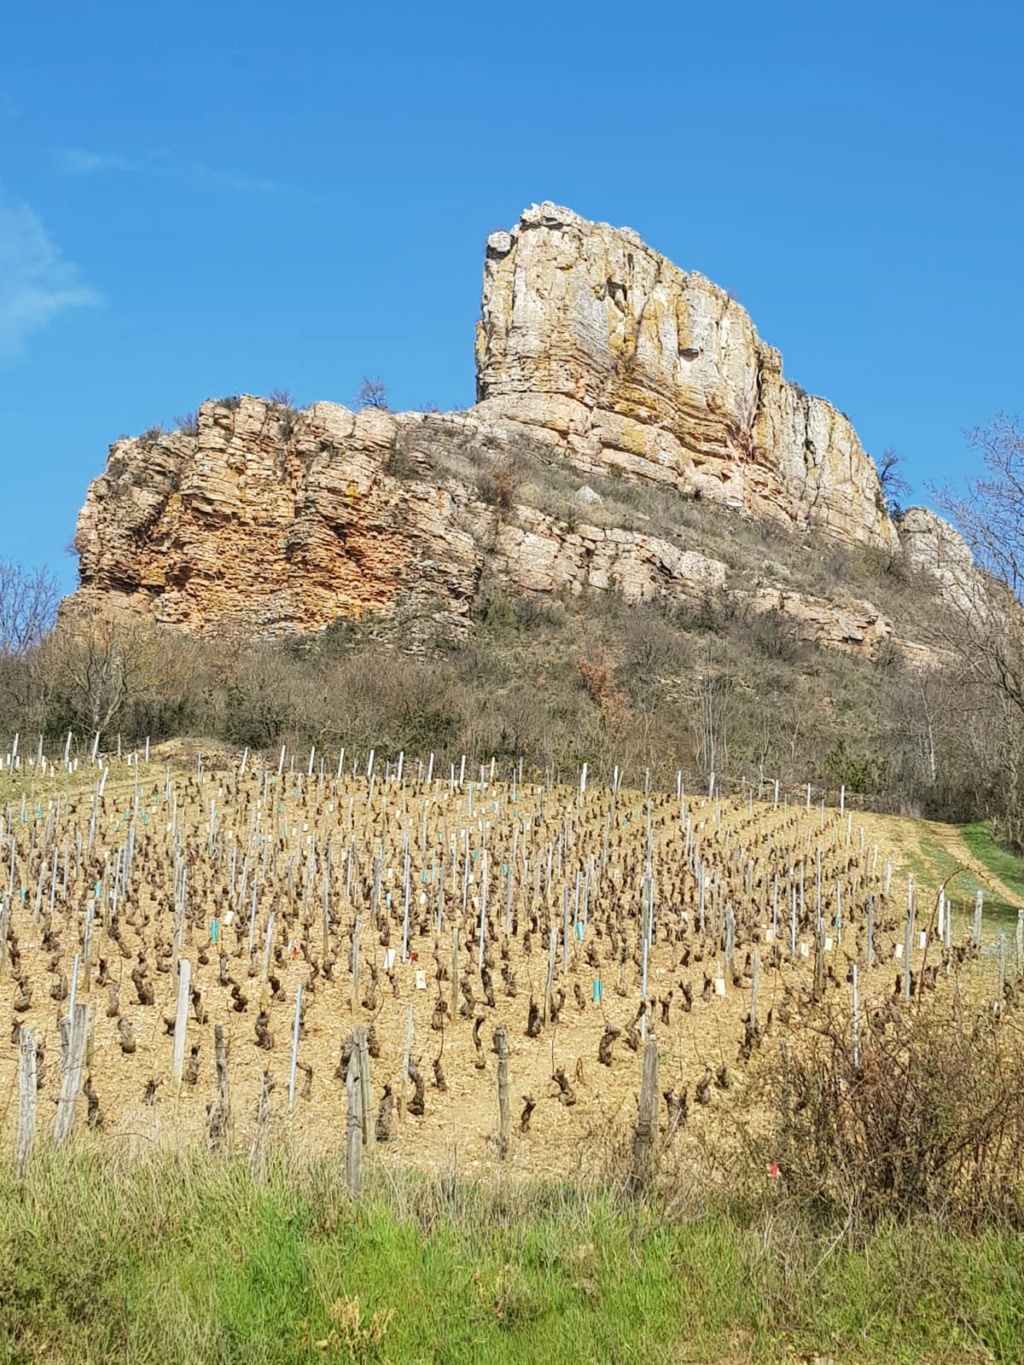 [VISUE] Beaujolais roche Solutré 06/03 - Page 4 Img-2015